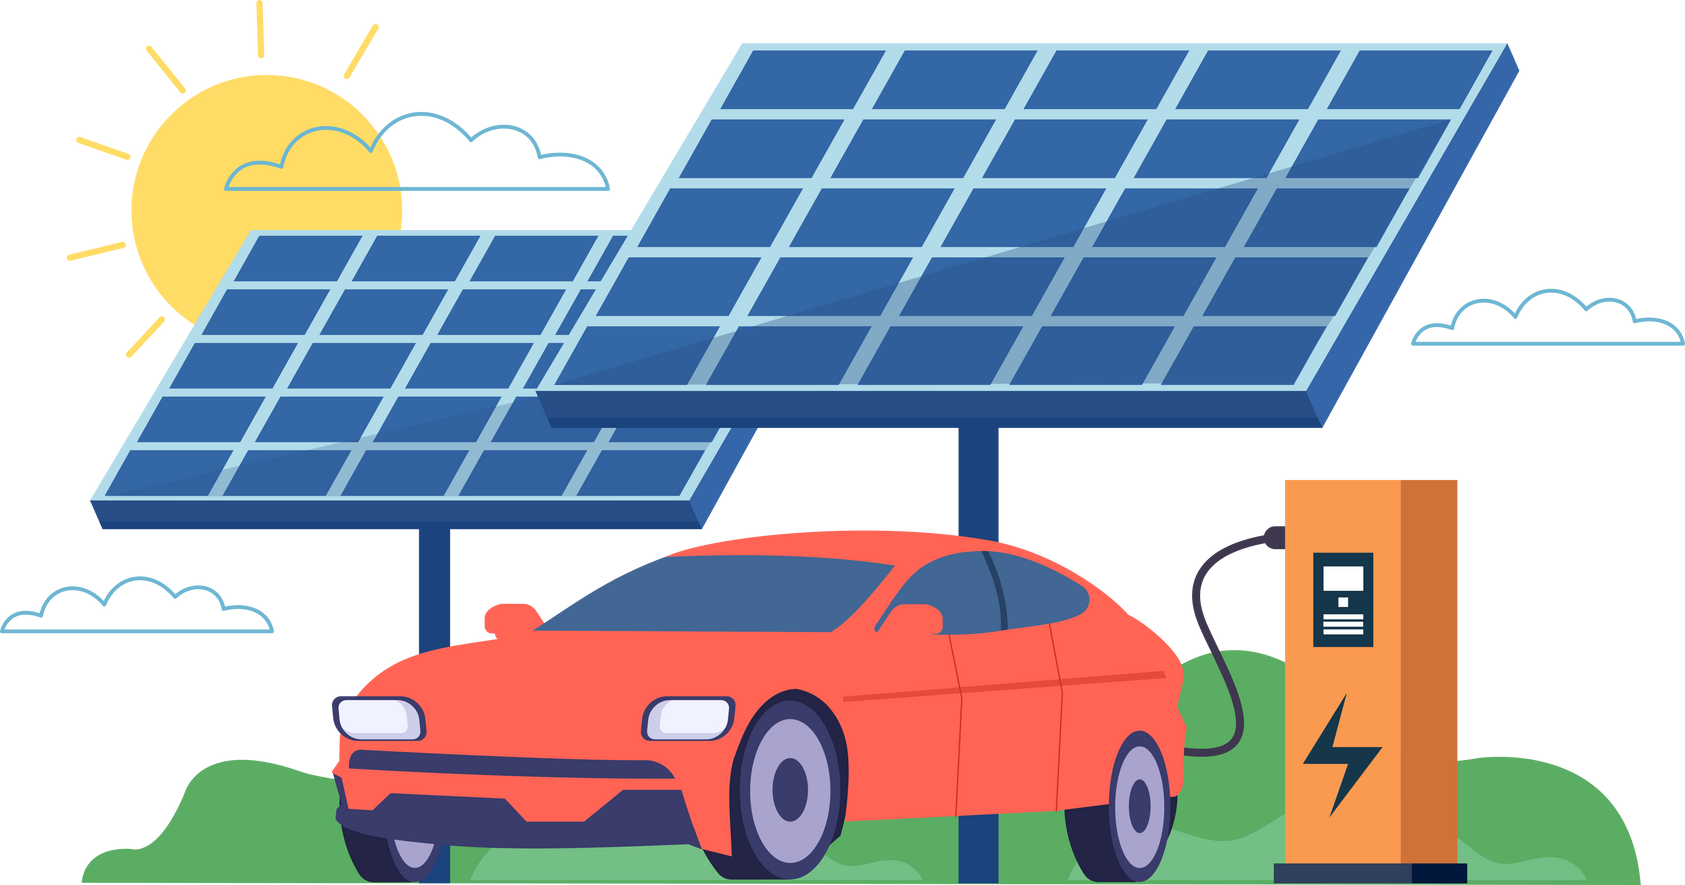 Electric car on renewable solar panel station